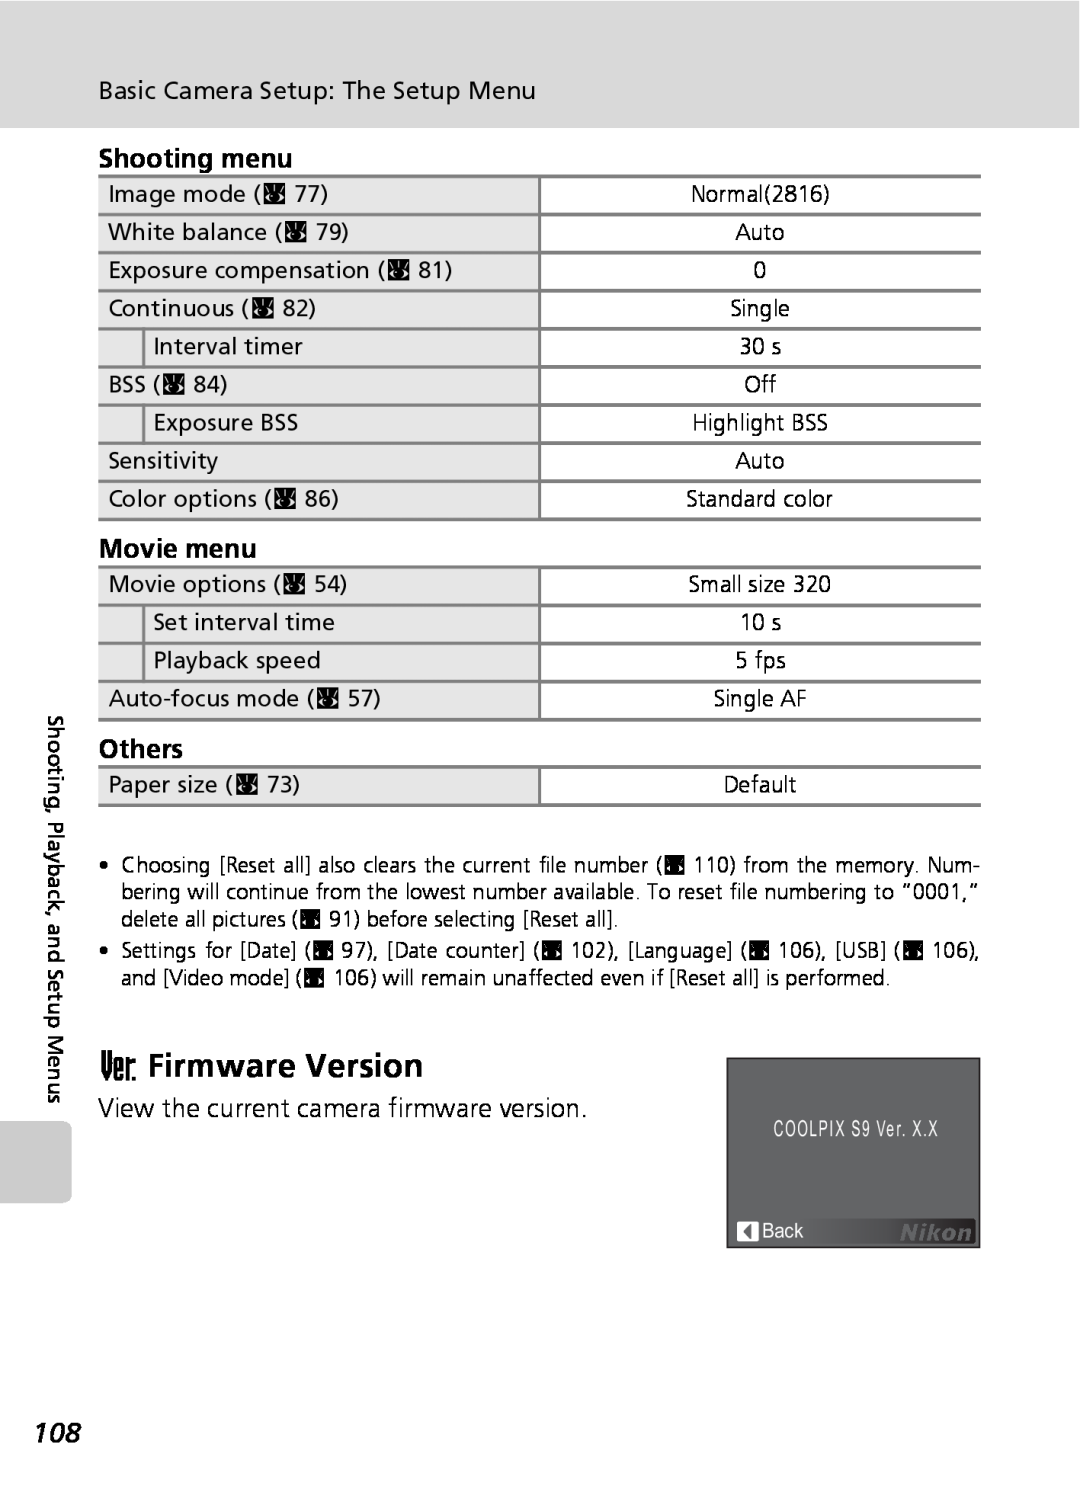 Nikon COOLPIXS9 manual B Firmware Version, Shooting menu, Movie menu, Others 